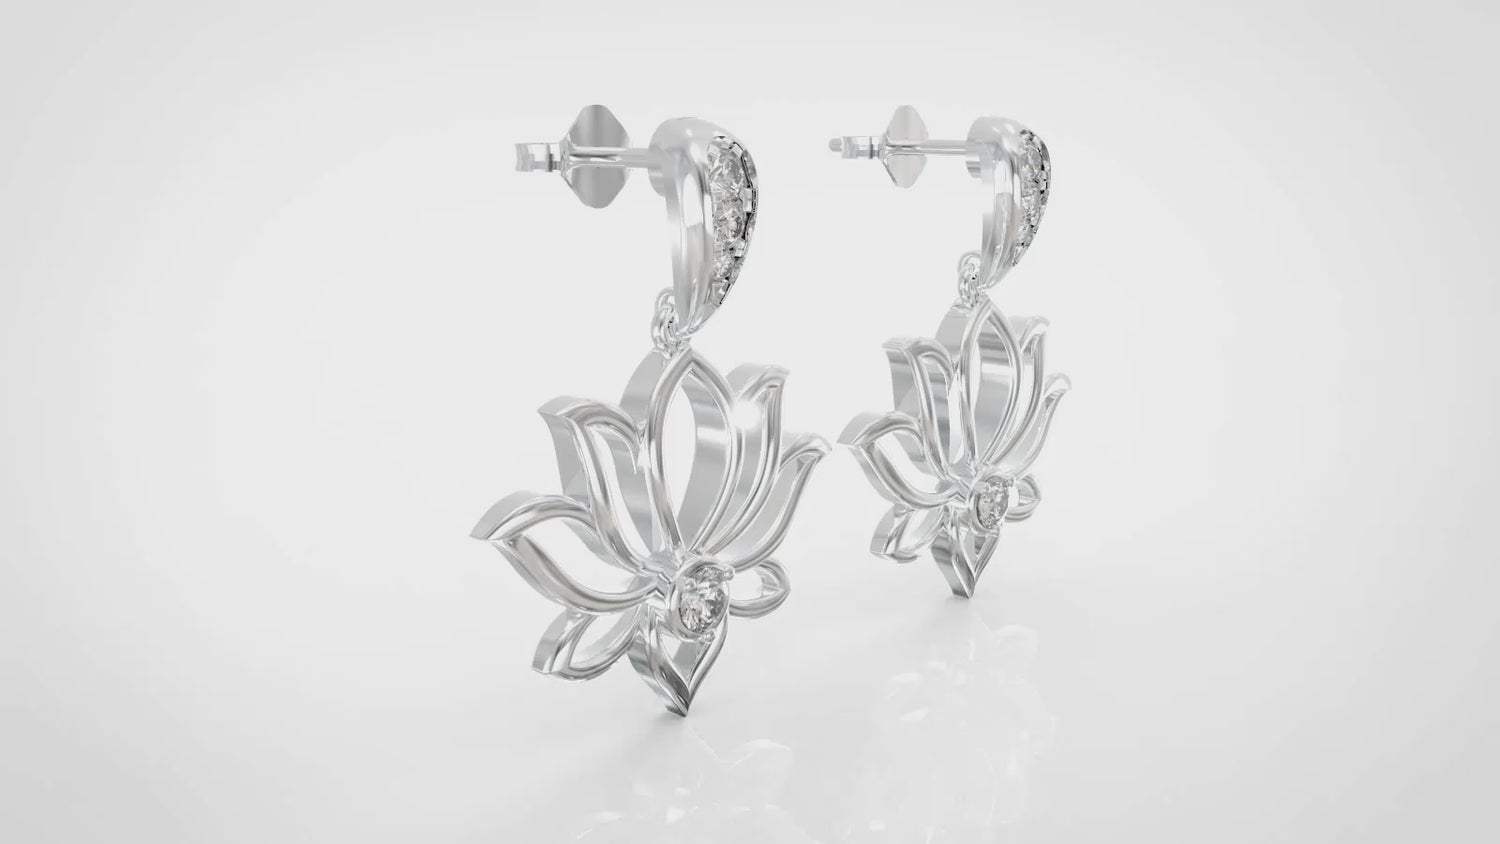 Set of 2 : 1/3 CT TW Diamond Lotus Pendant & Earrings in Sterling Silver